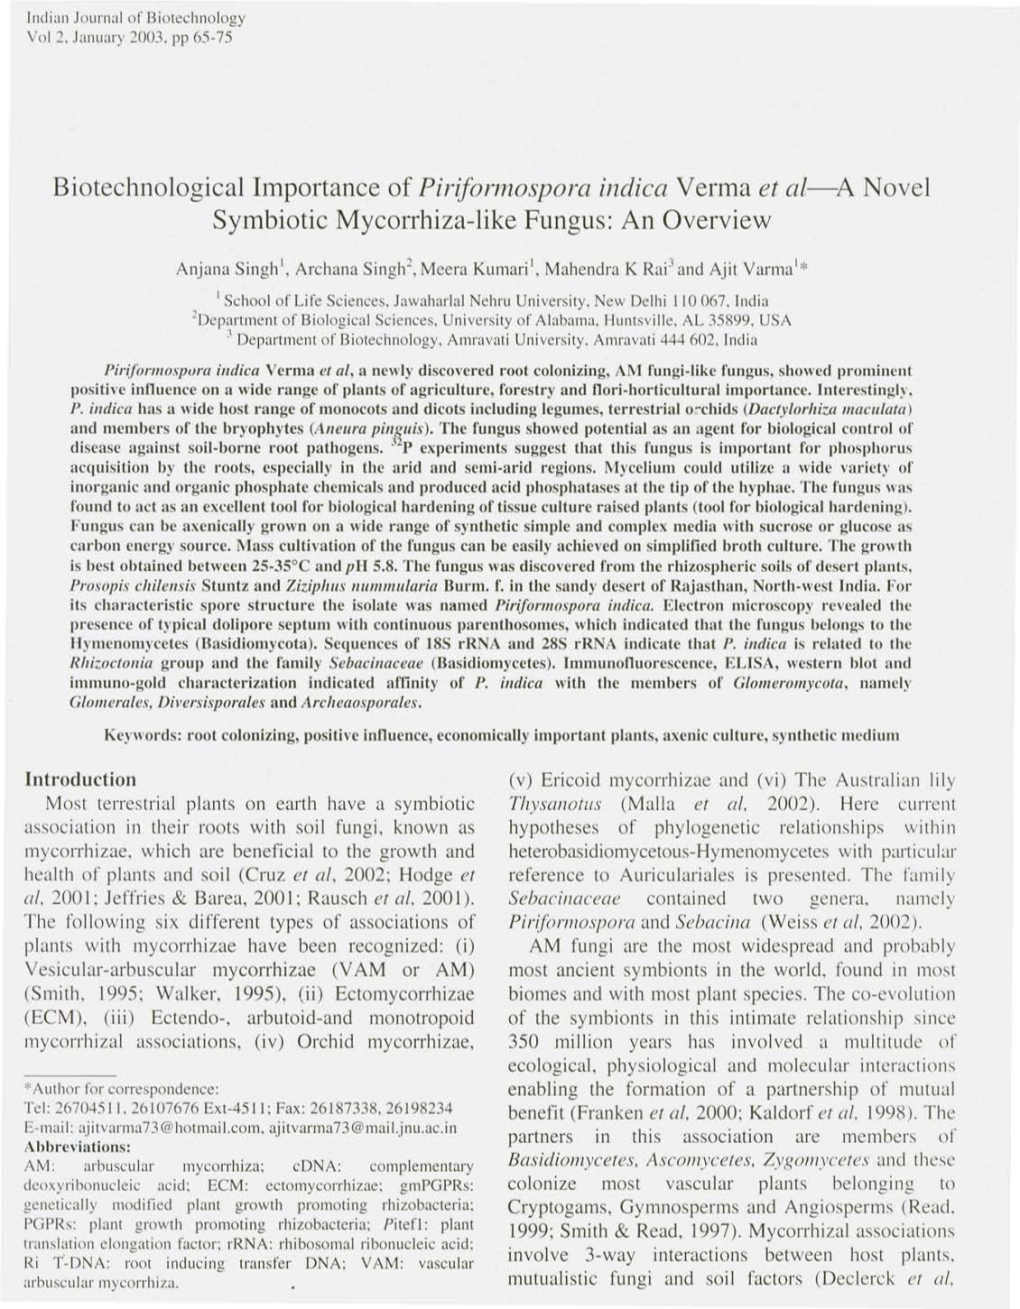 Biotechnological Importance of Piriformospora Indica Verma Et Al-A Novel Symbiotic Mycorrhiza-Like Fungus: an Overview